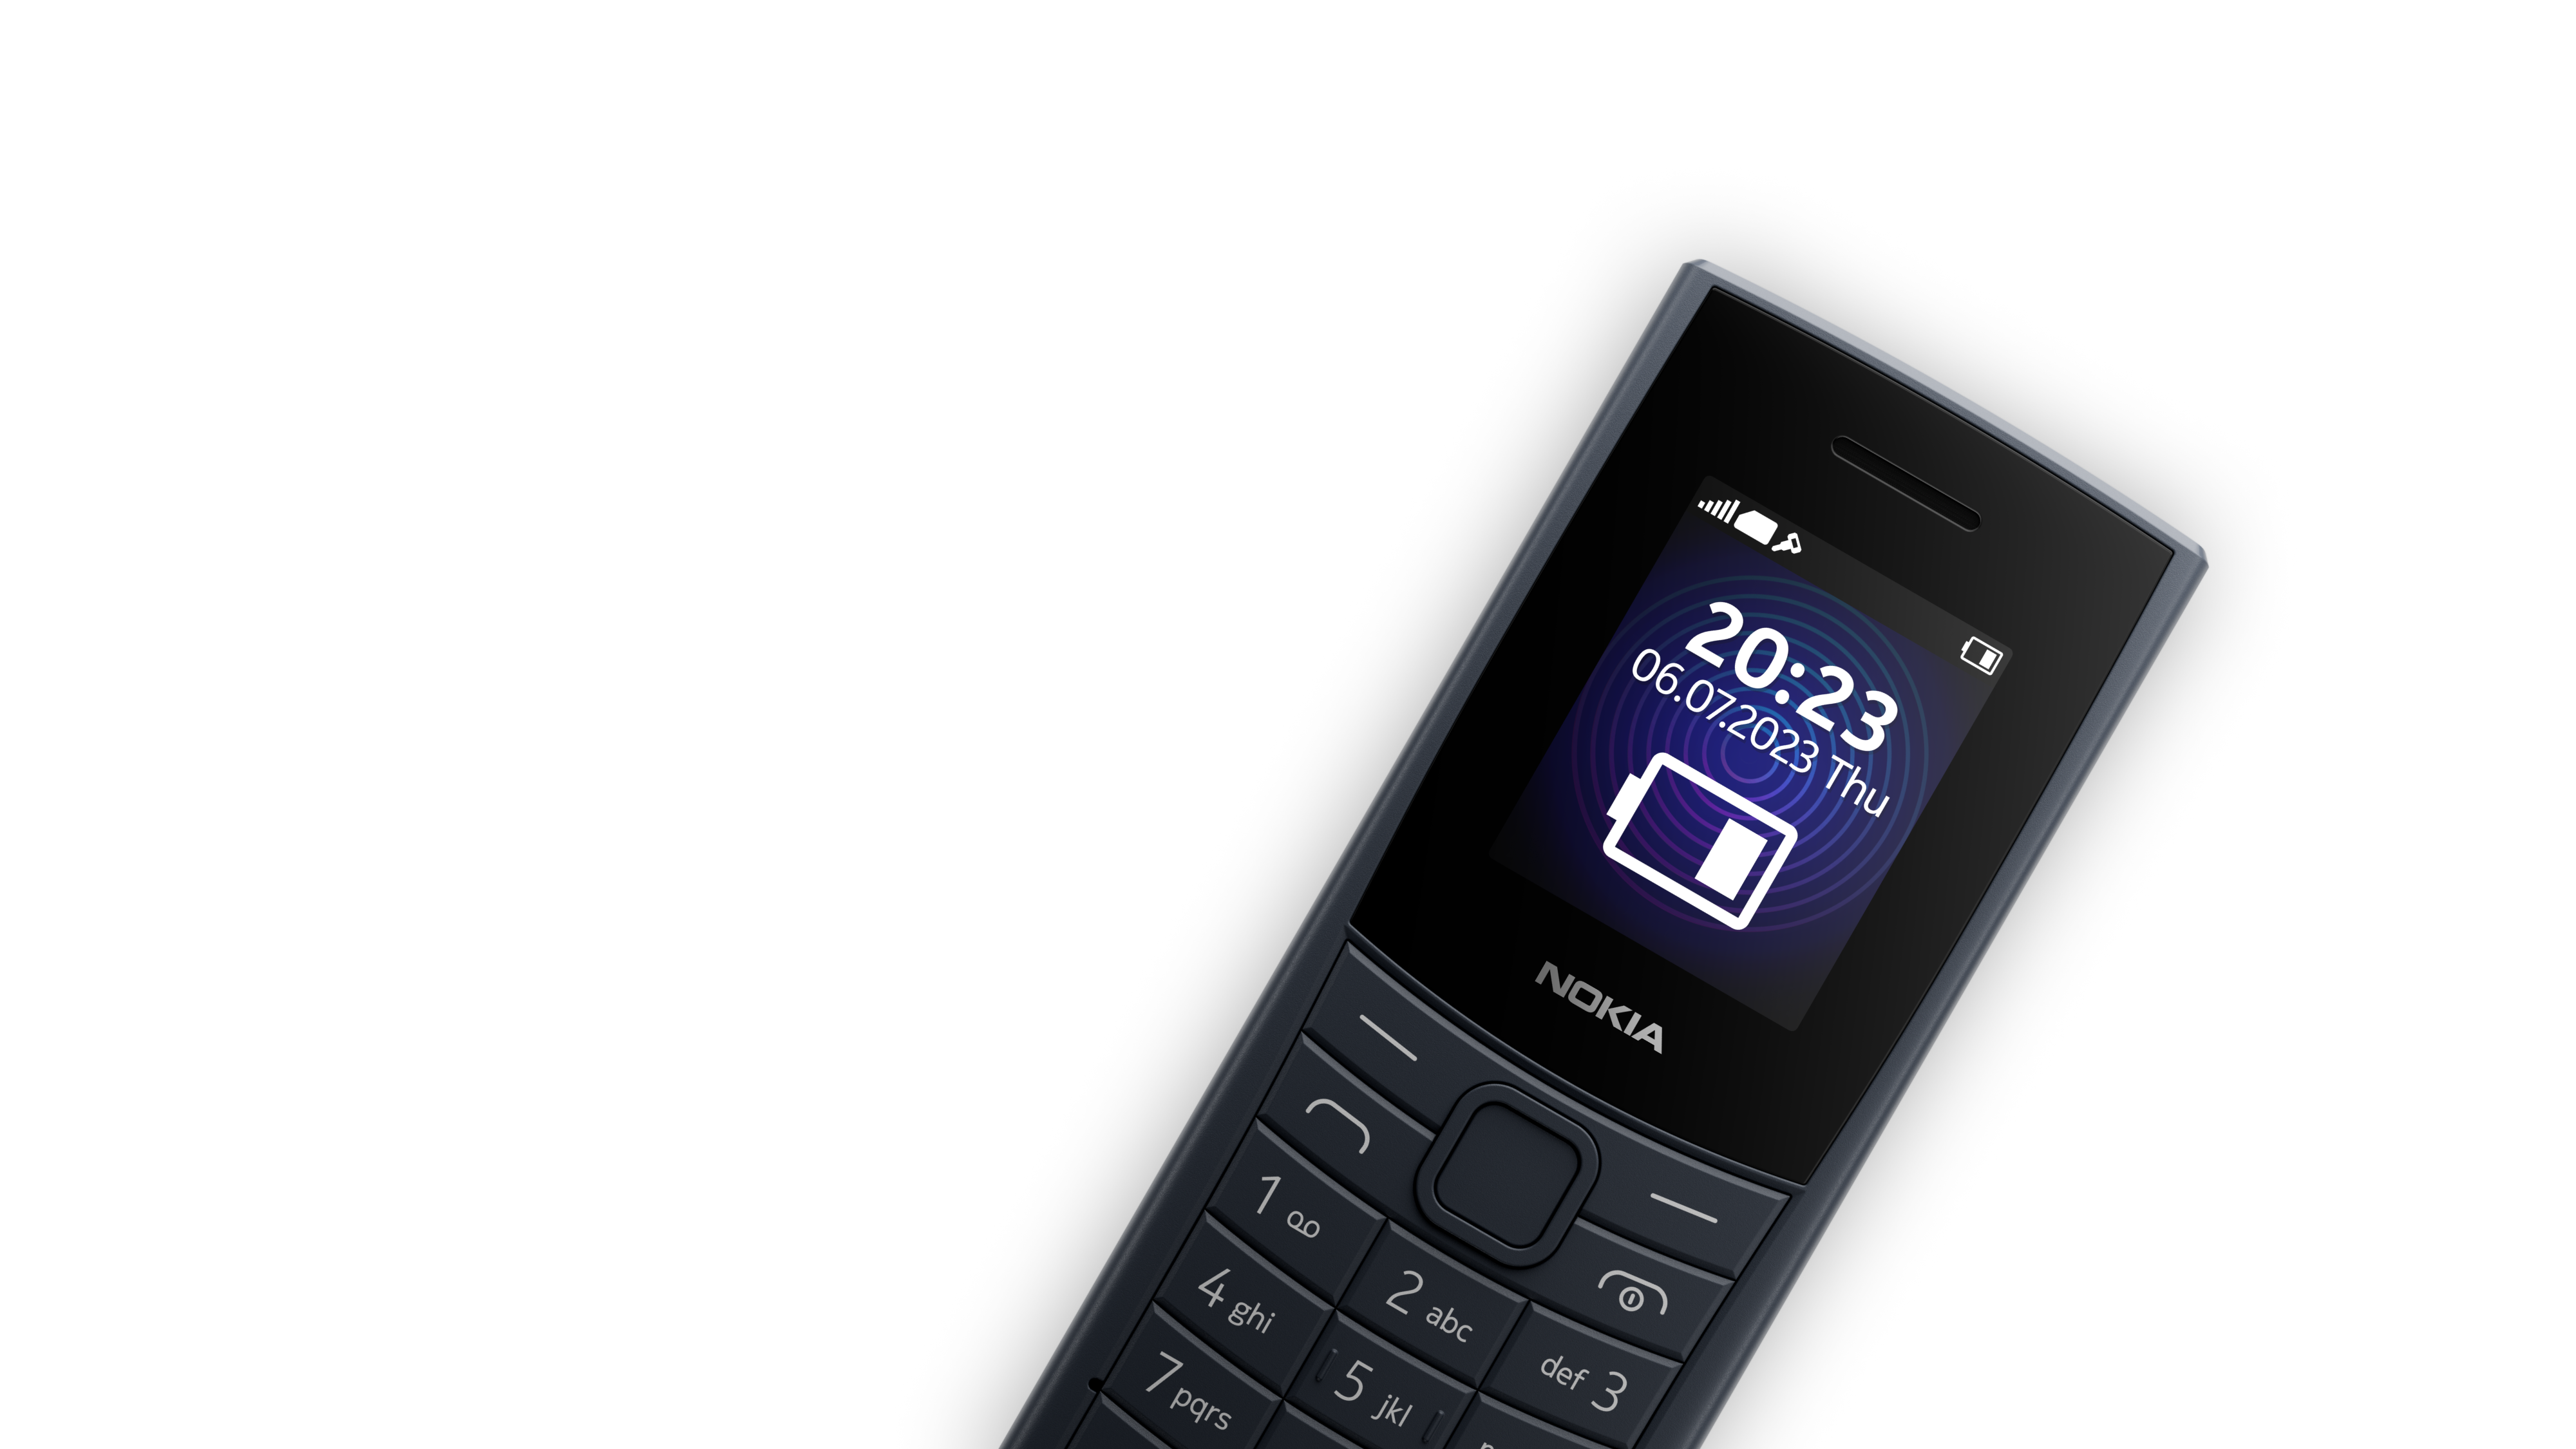 Nokia 110 4G 2023 Reviewed: Stunning Design, Updated Features! -  Nokiapoweruser